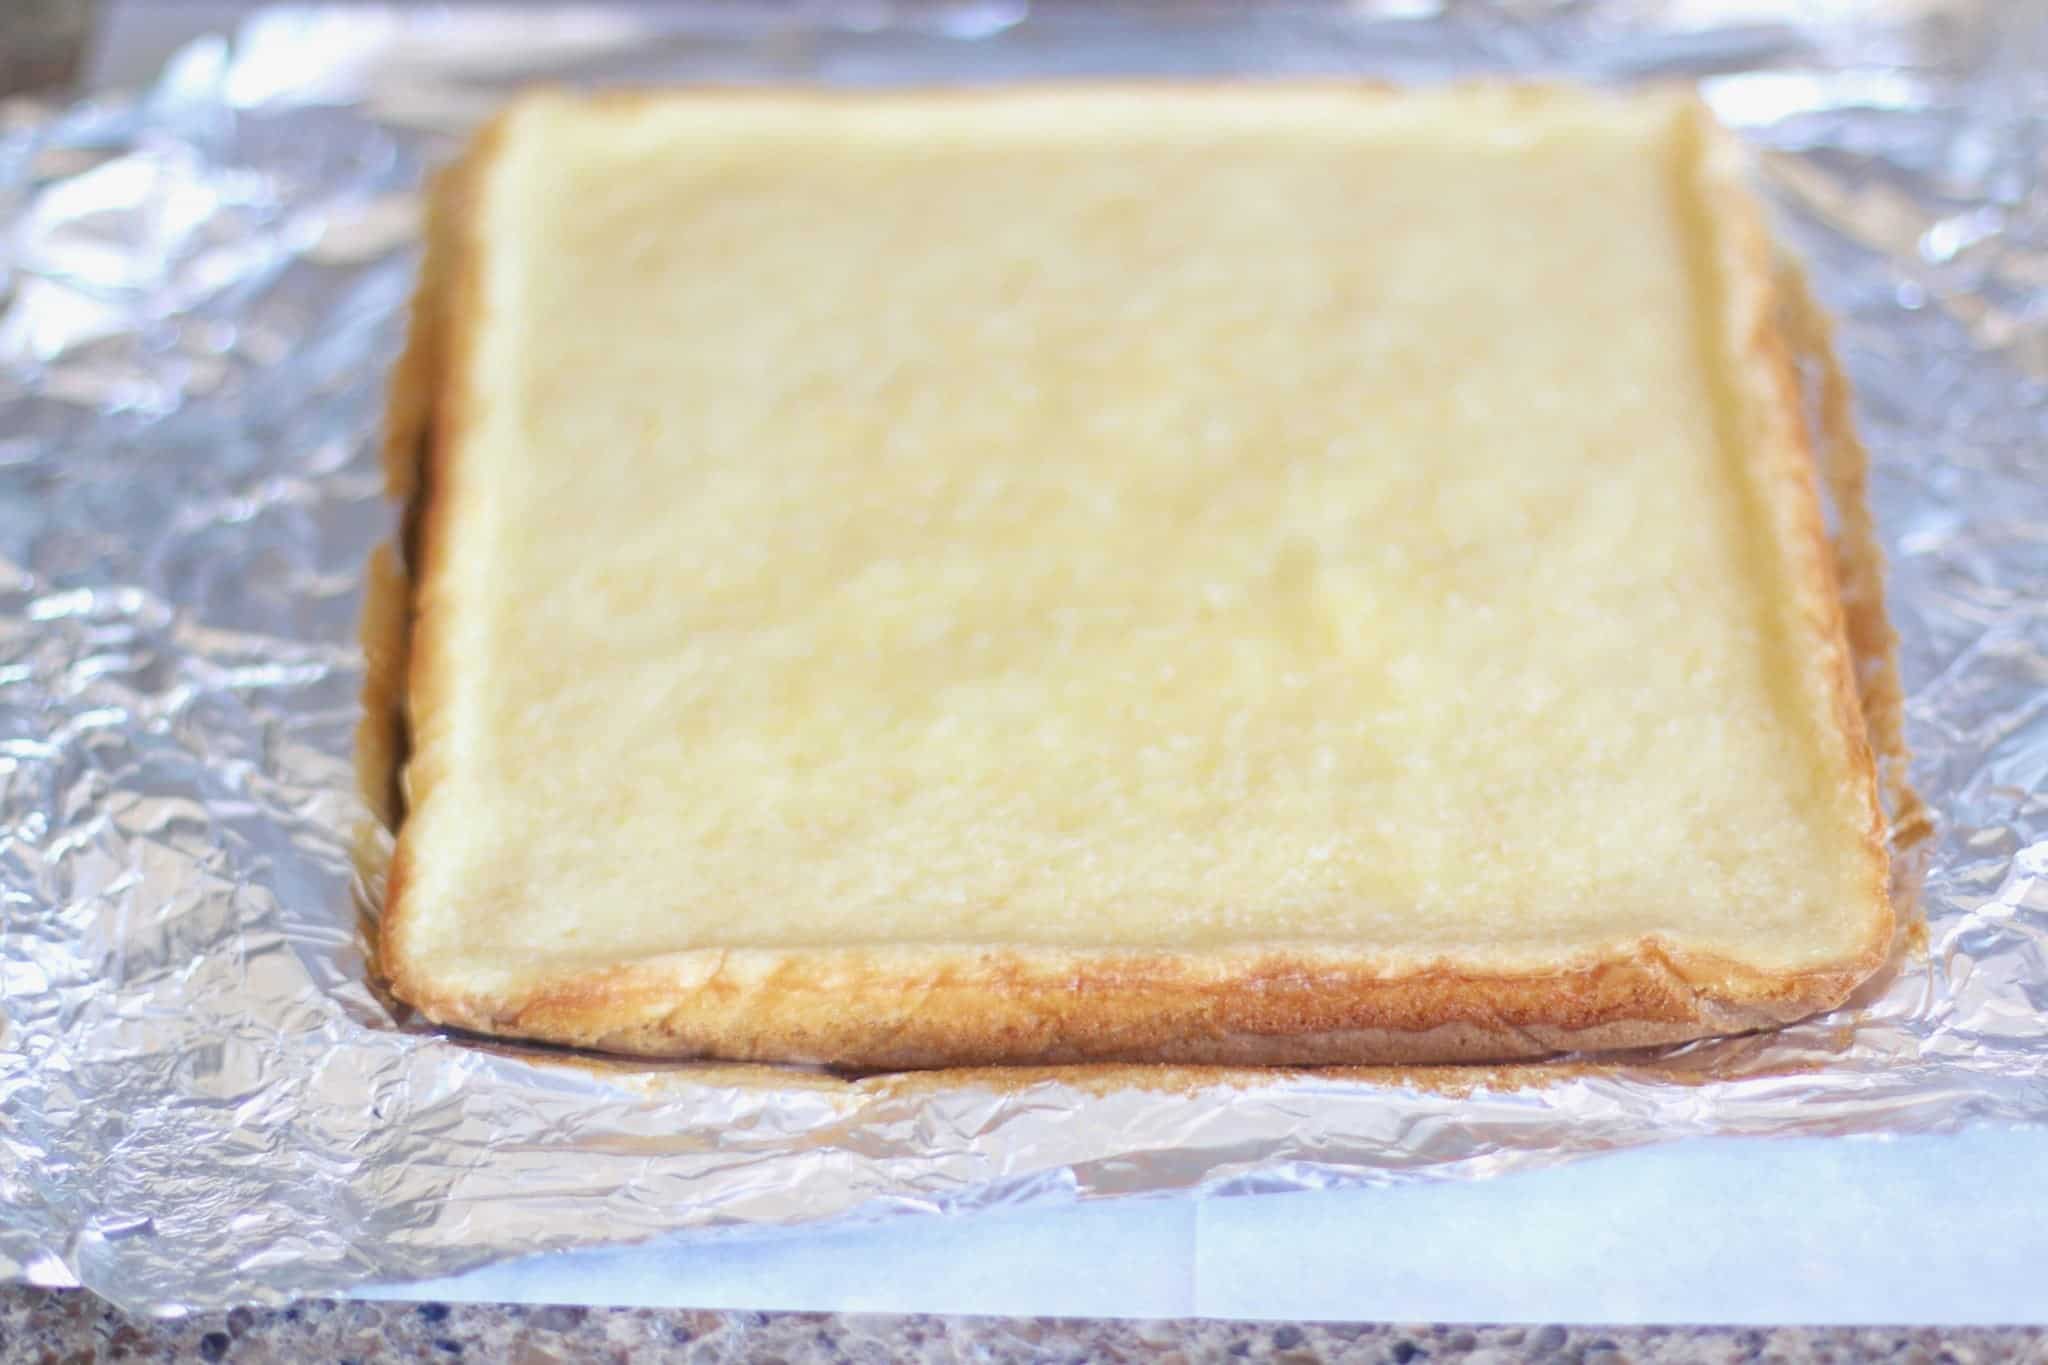 baked cream cheese lemon bars.